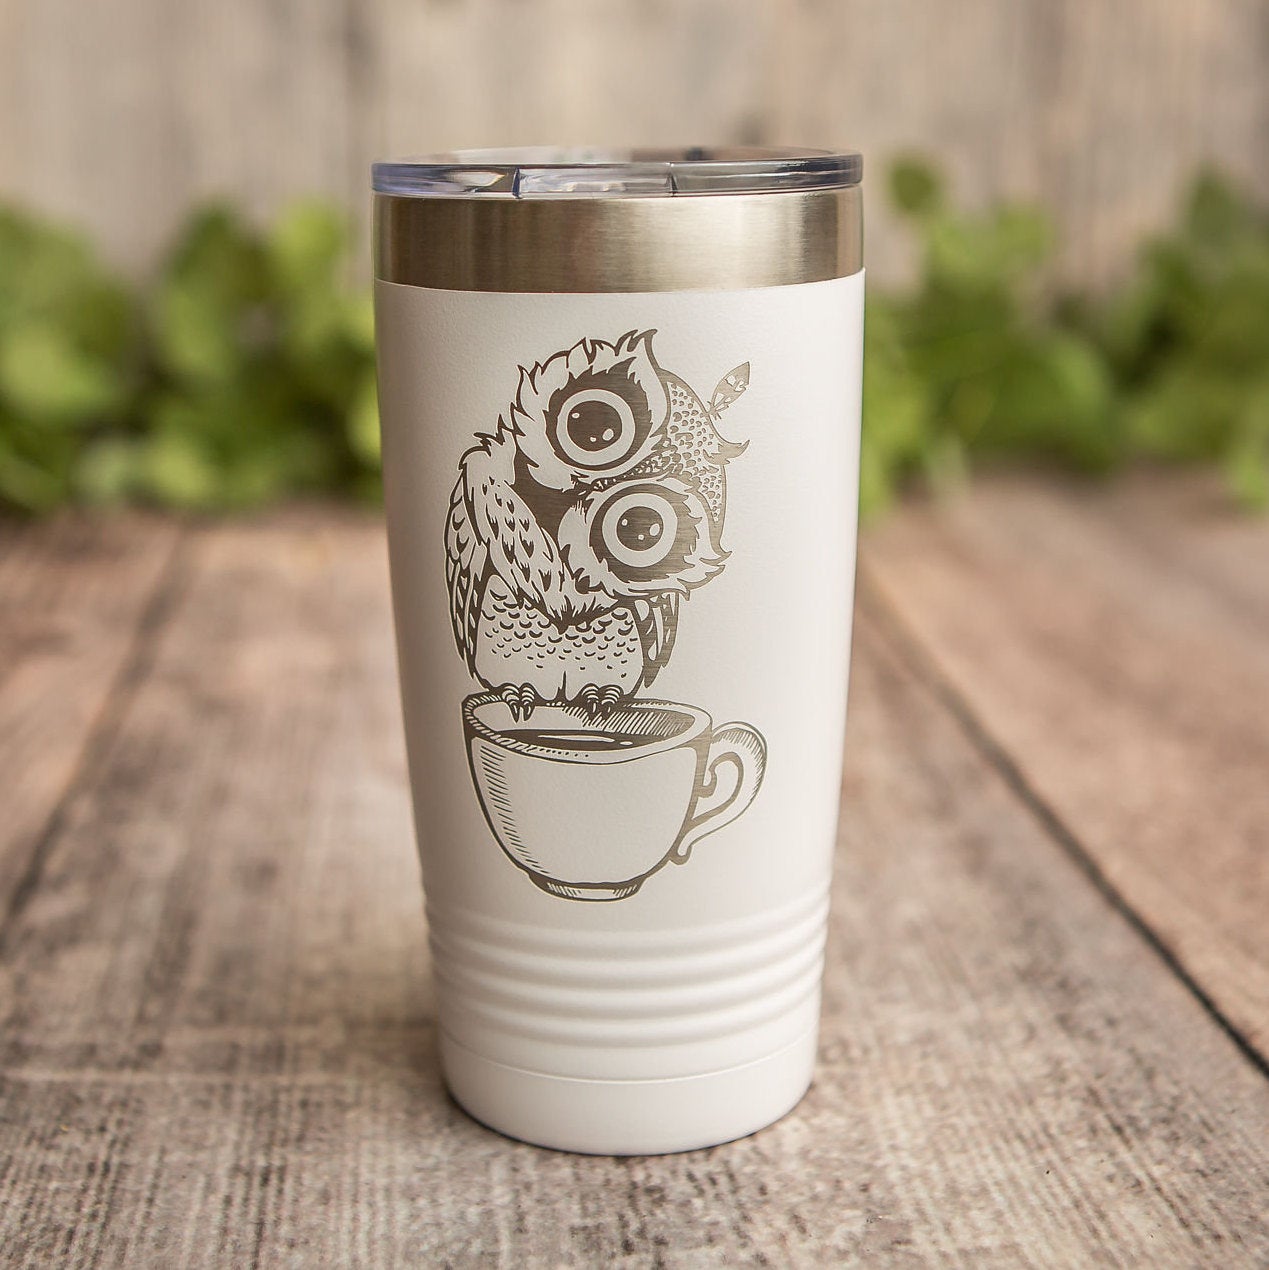 https://3cetching.com/wp-content/uploads/2020/09/cute-owl-engraved-stainless-steel-tumbler-owl-travel-mug-owl-mug-5f5fd716.jpg